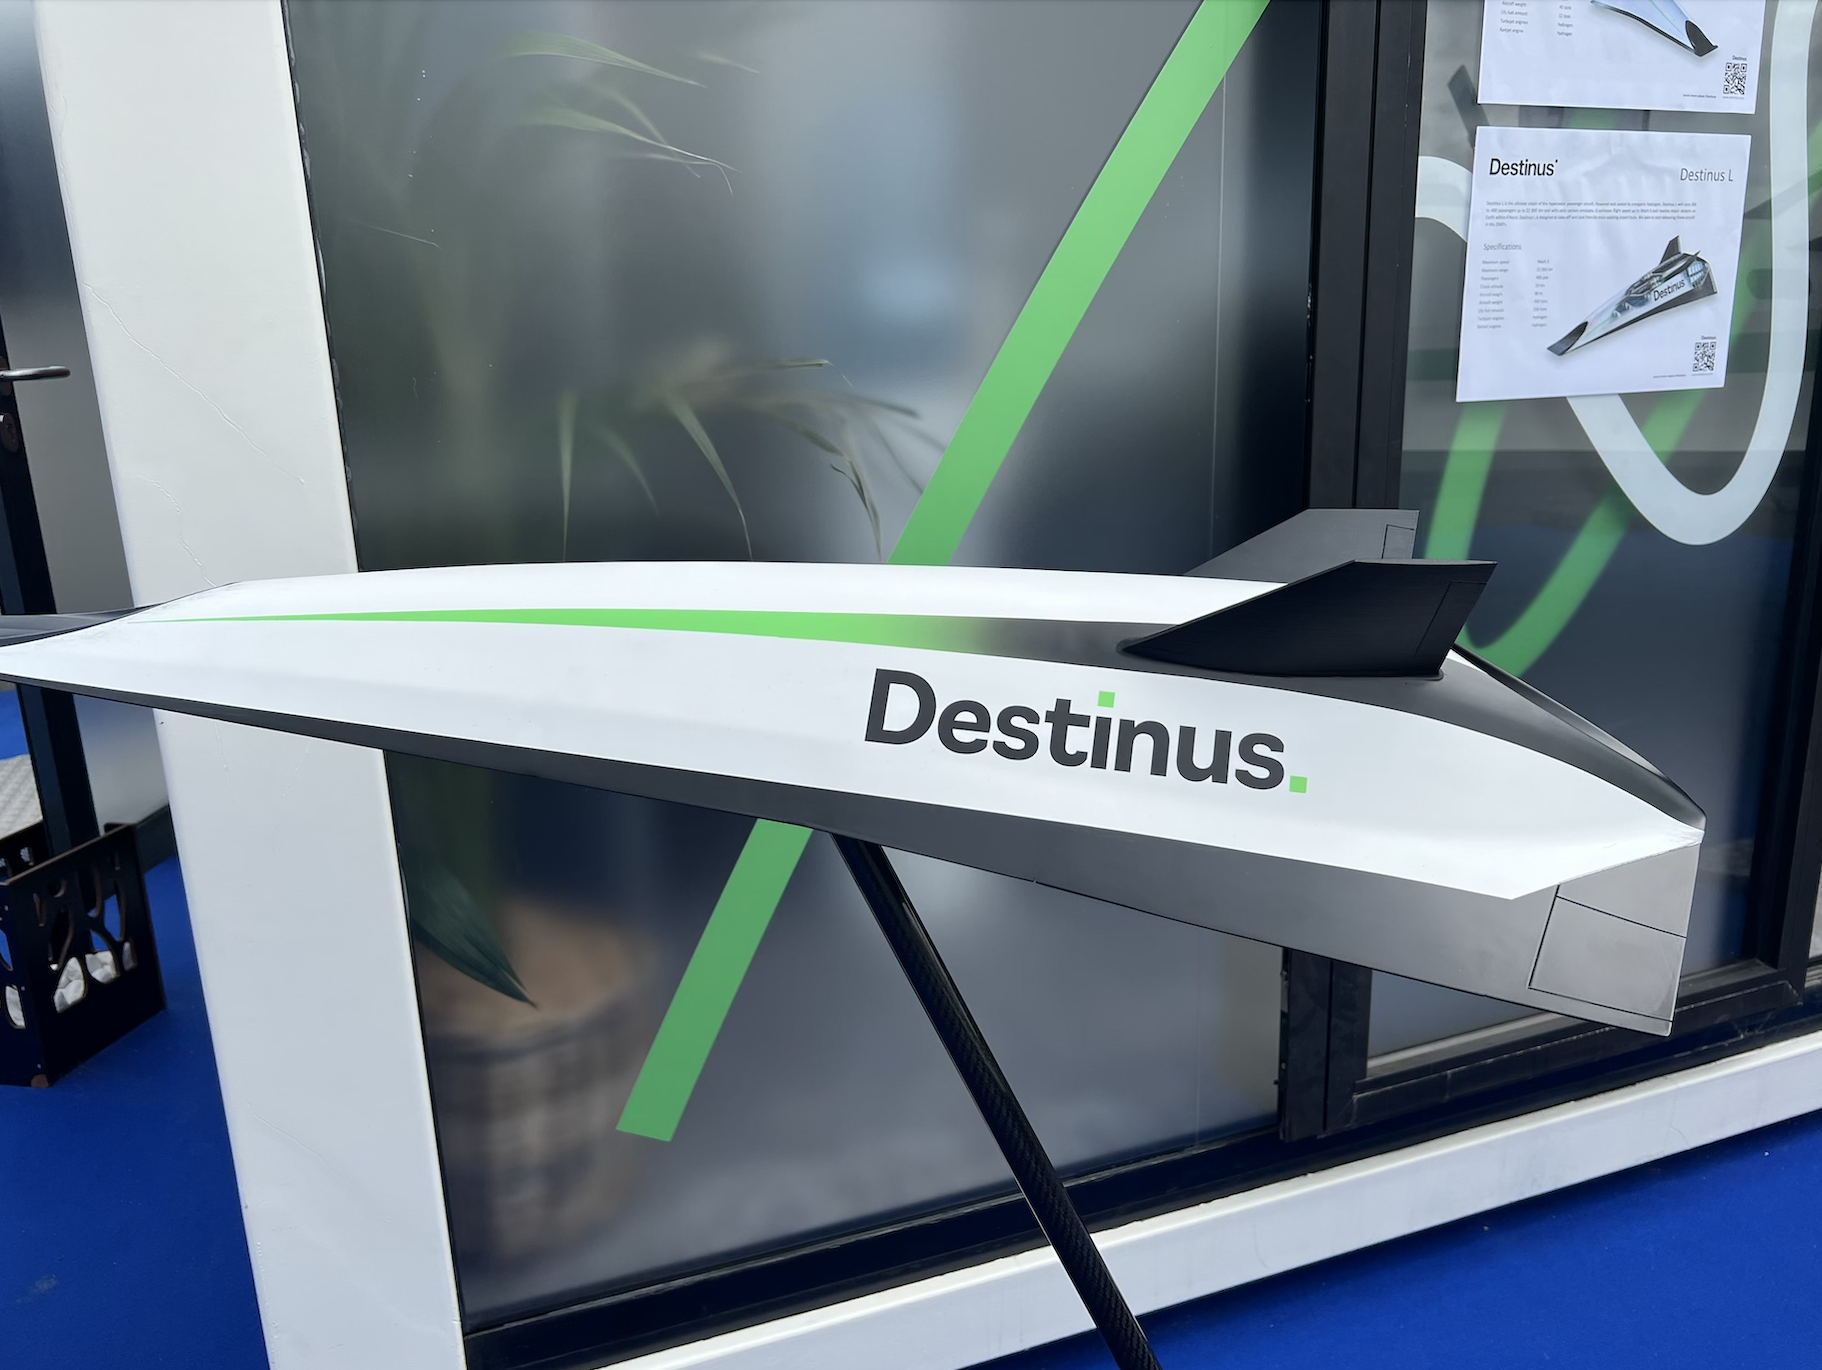 Destinus S model aircraft at the Paris Air Show 2023.